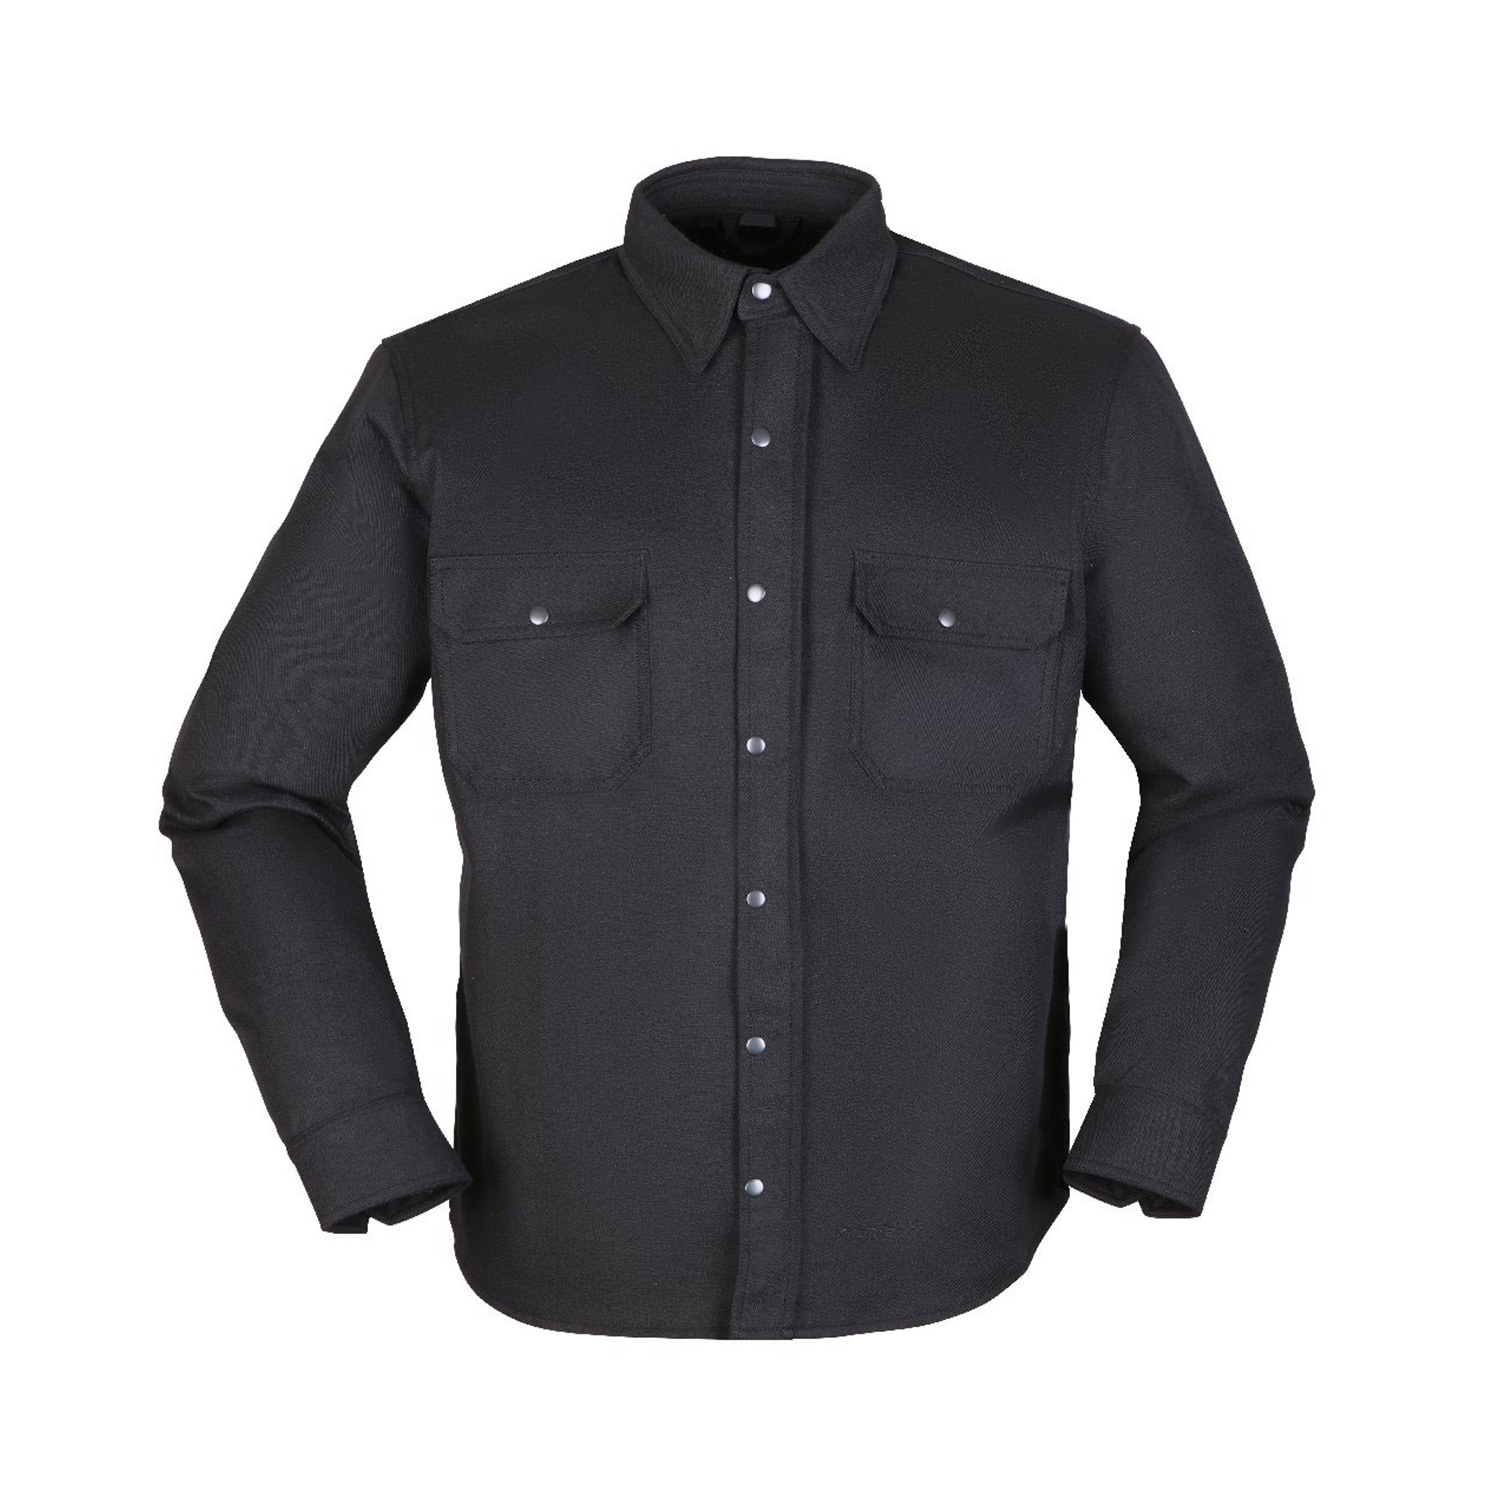 Modeka Colden Motoshirt Black Size L